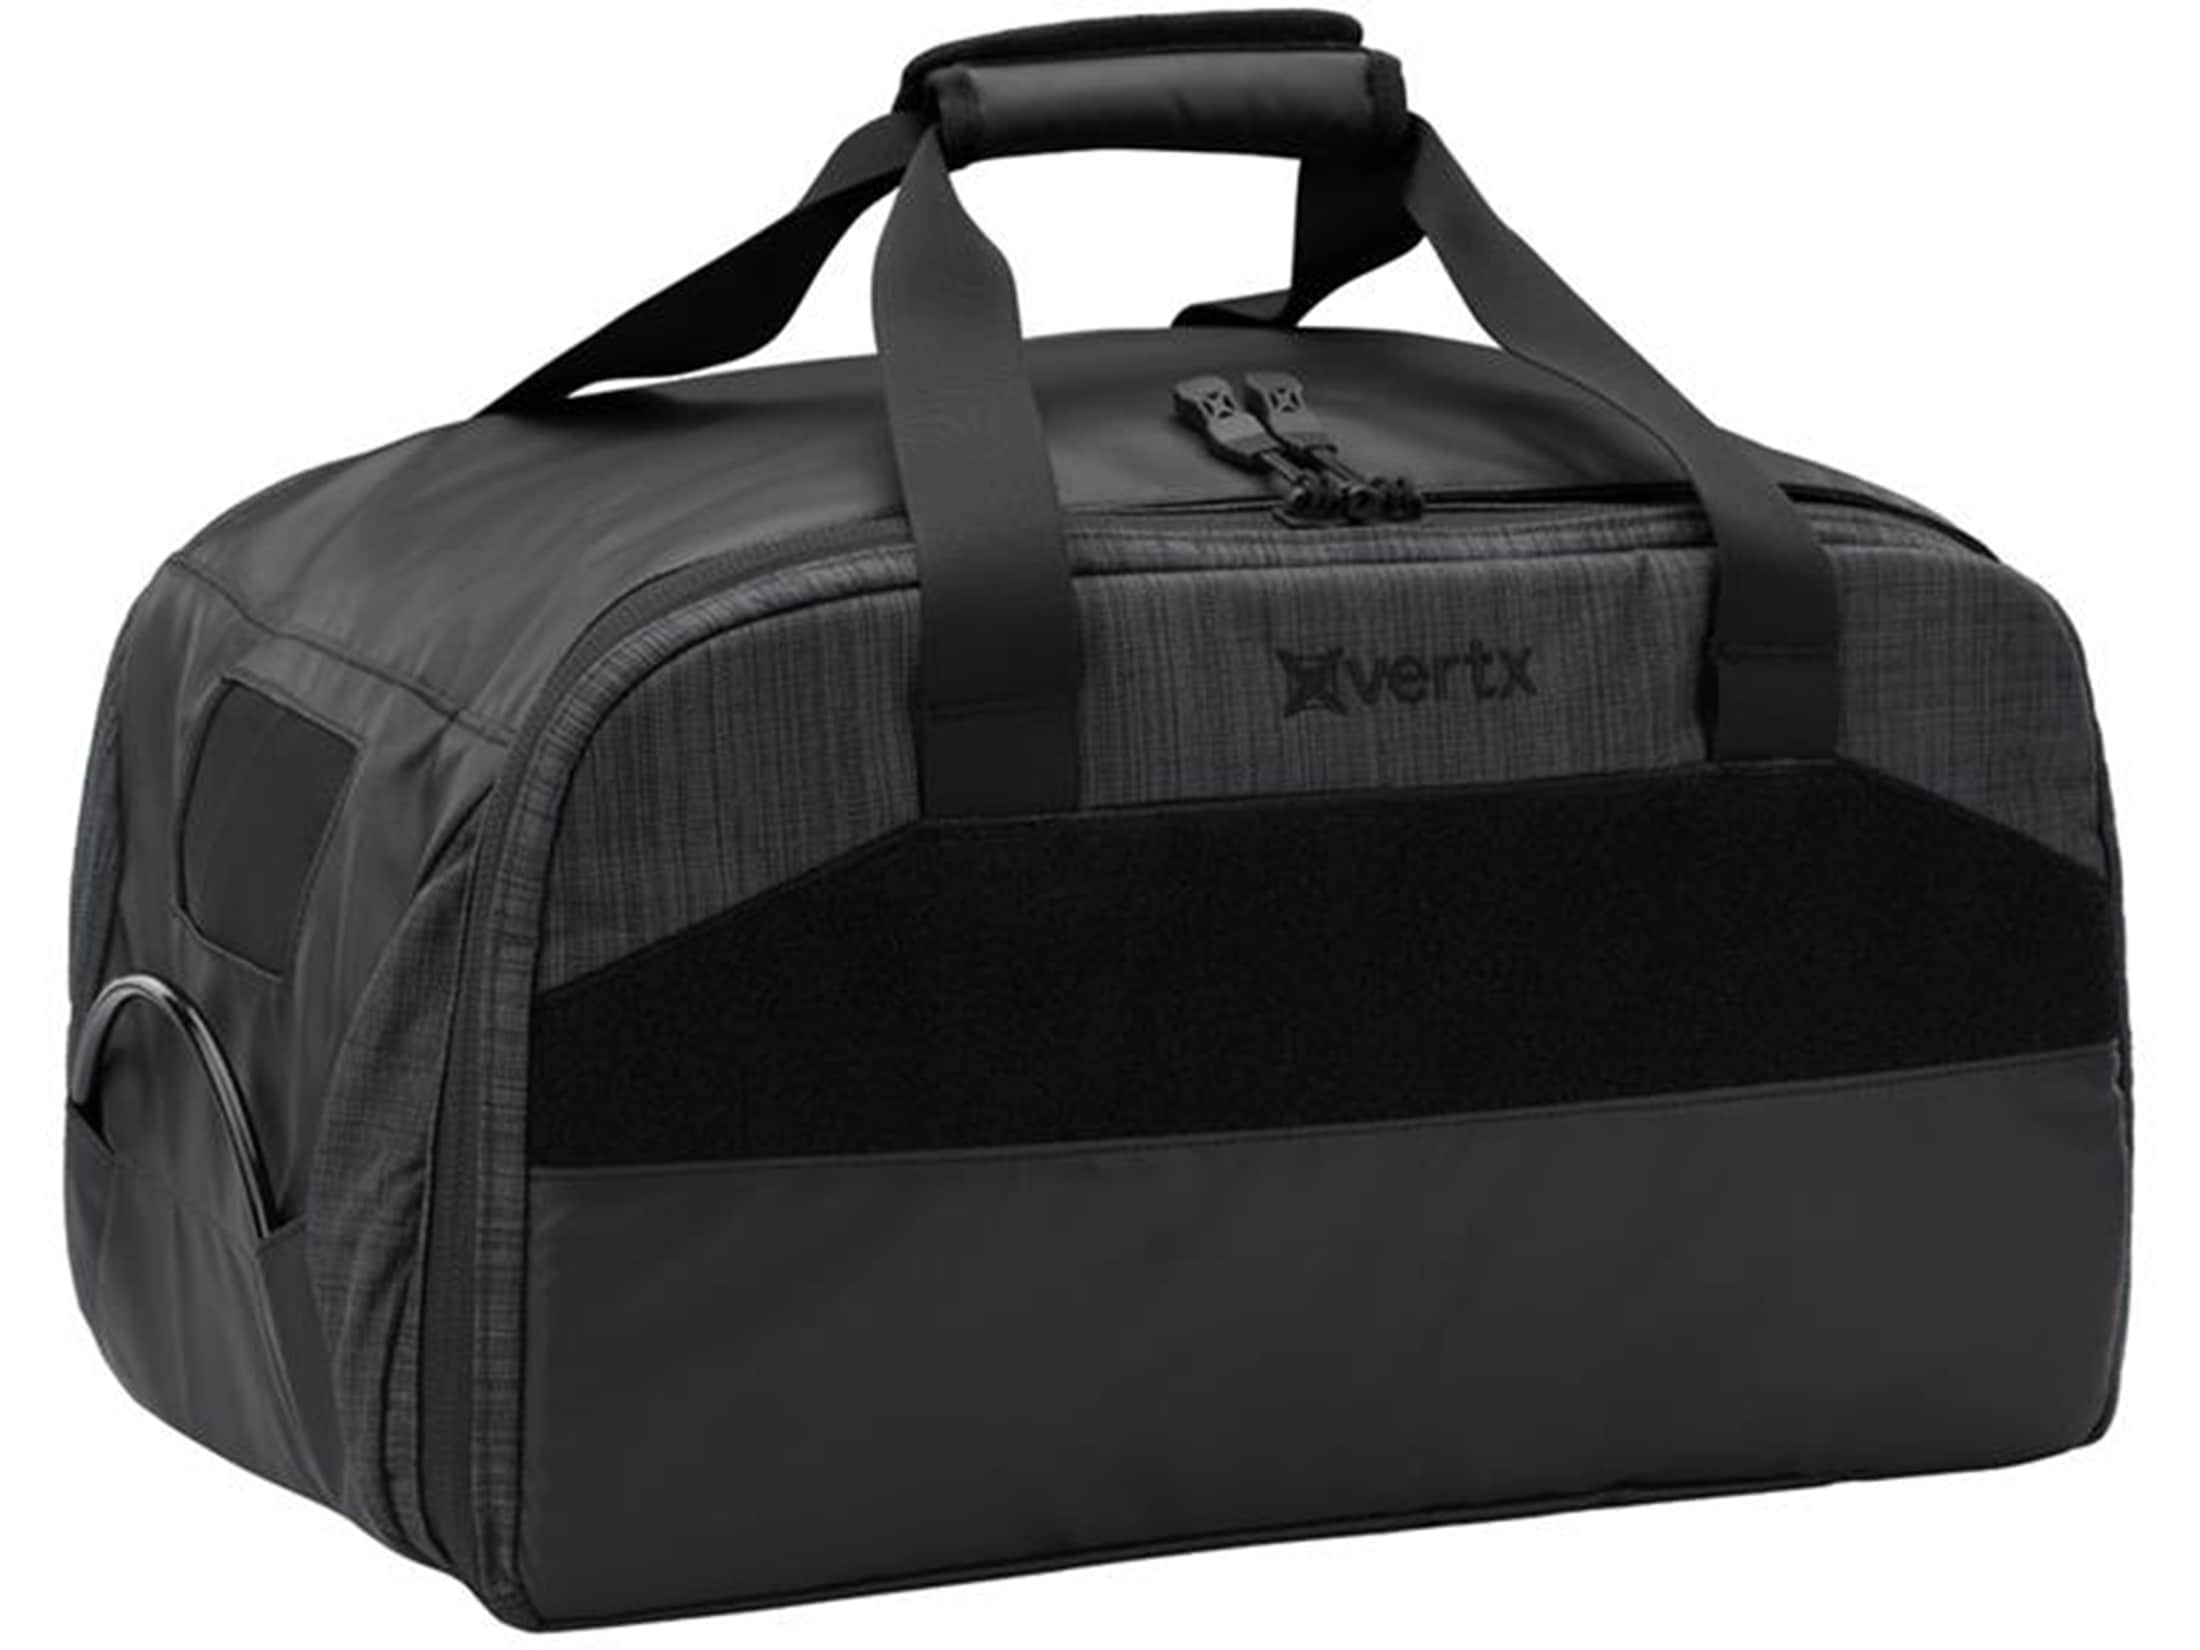 Vertx COF Heavy Range Bag Heather Black/Galaxy Black For Sale